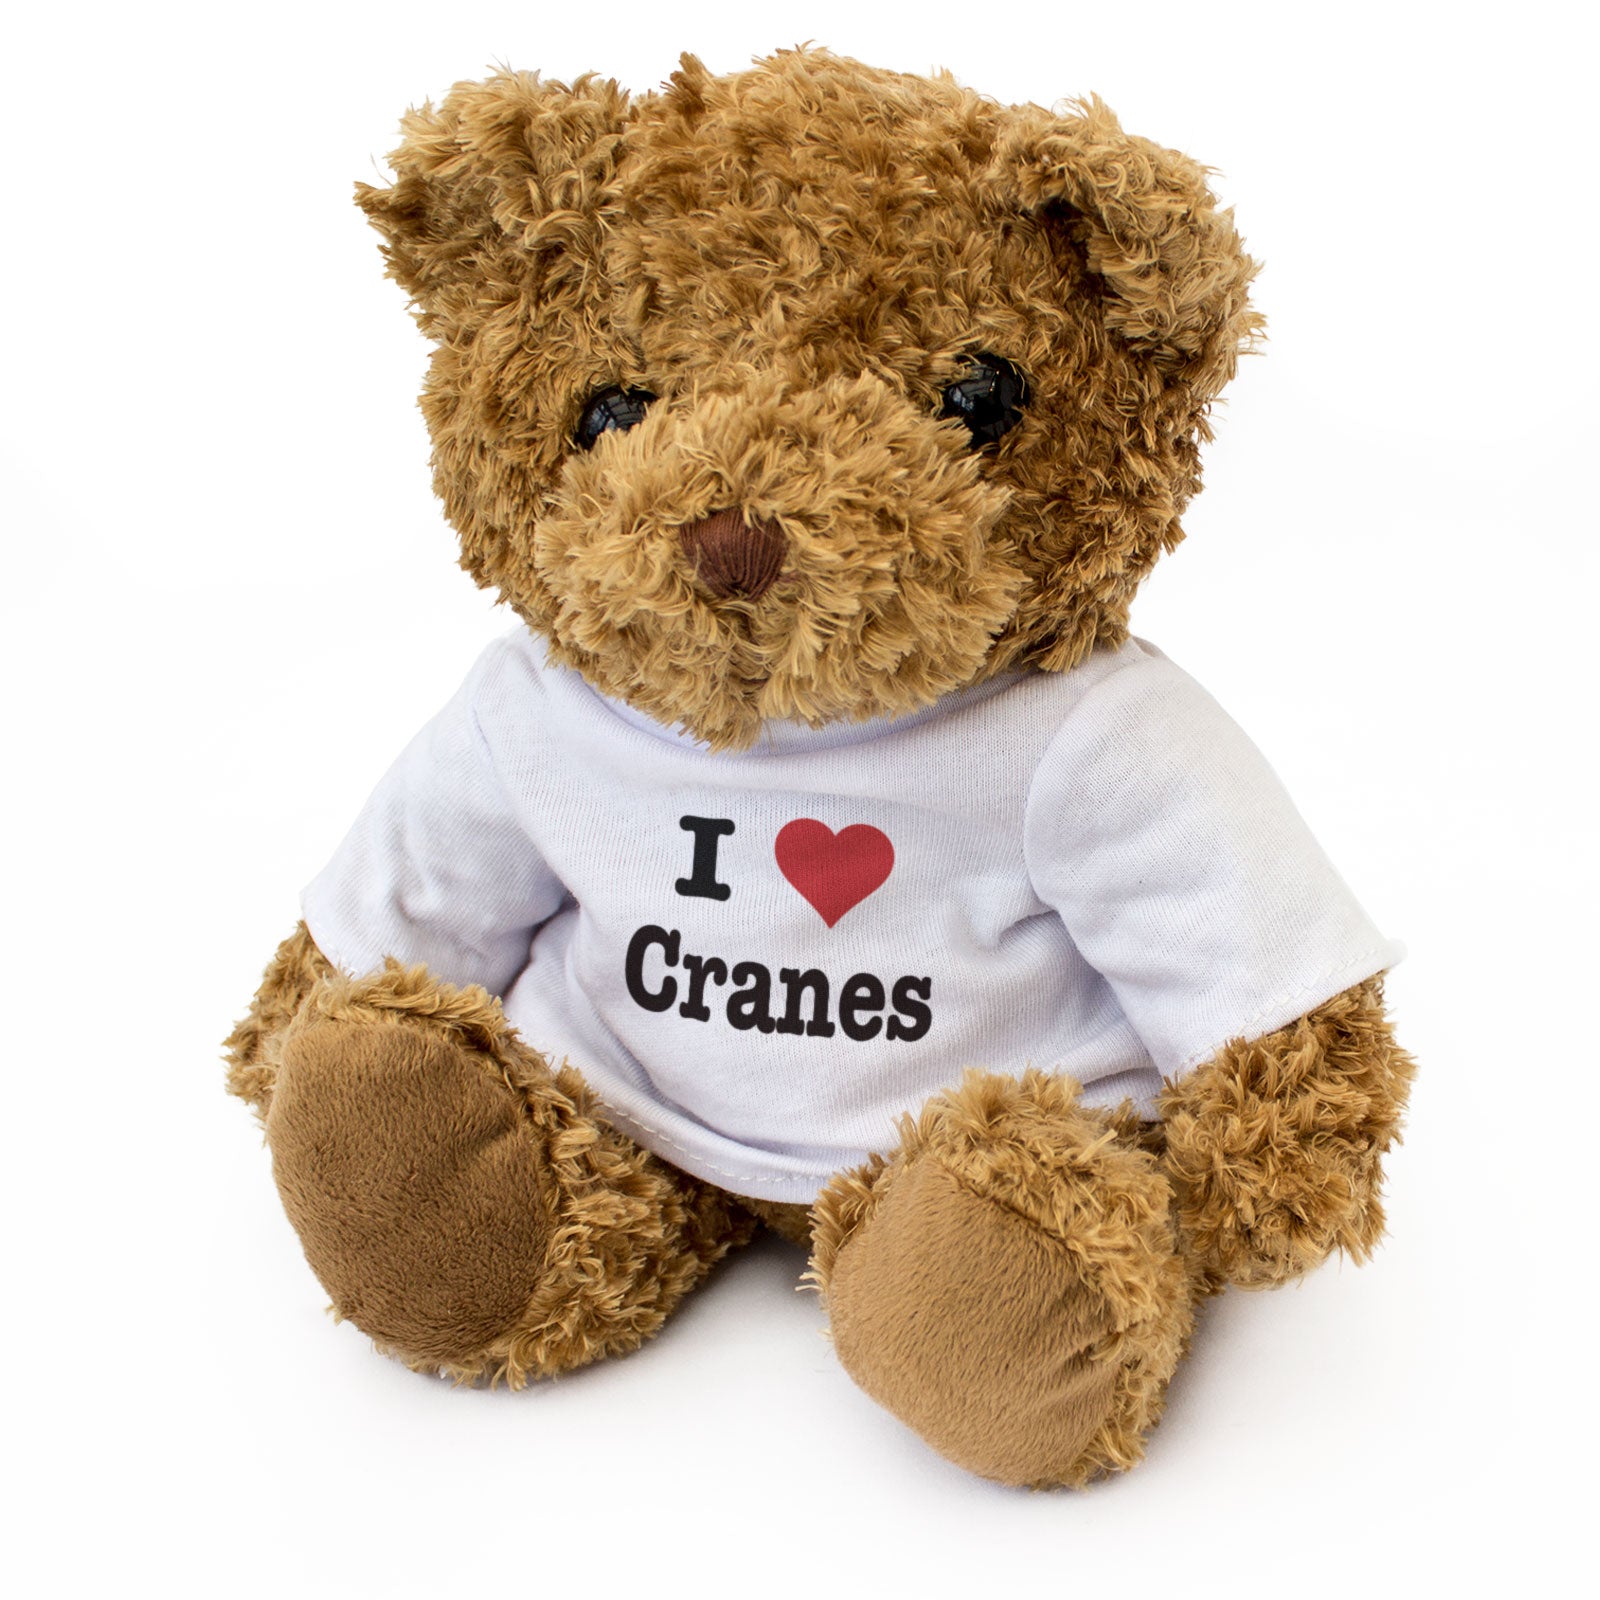 I Love Cranes - Teddy Bear